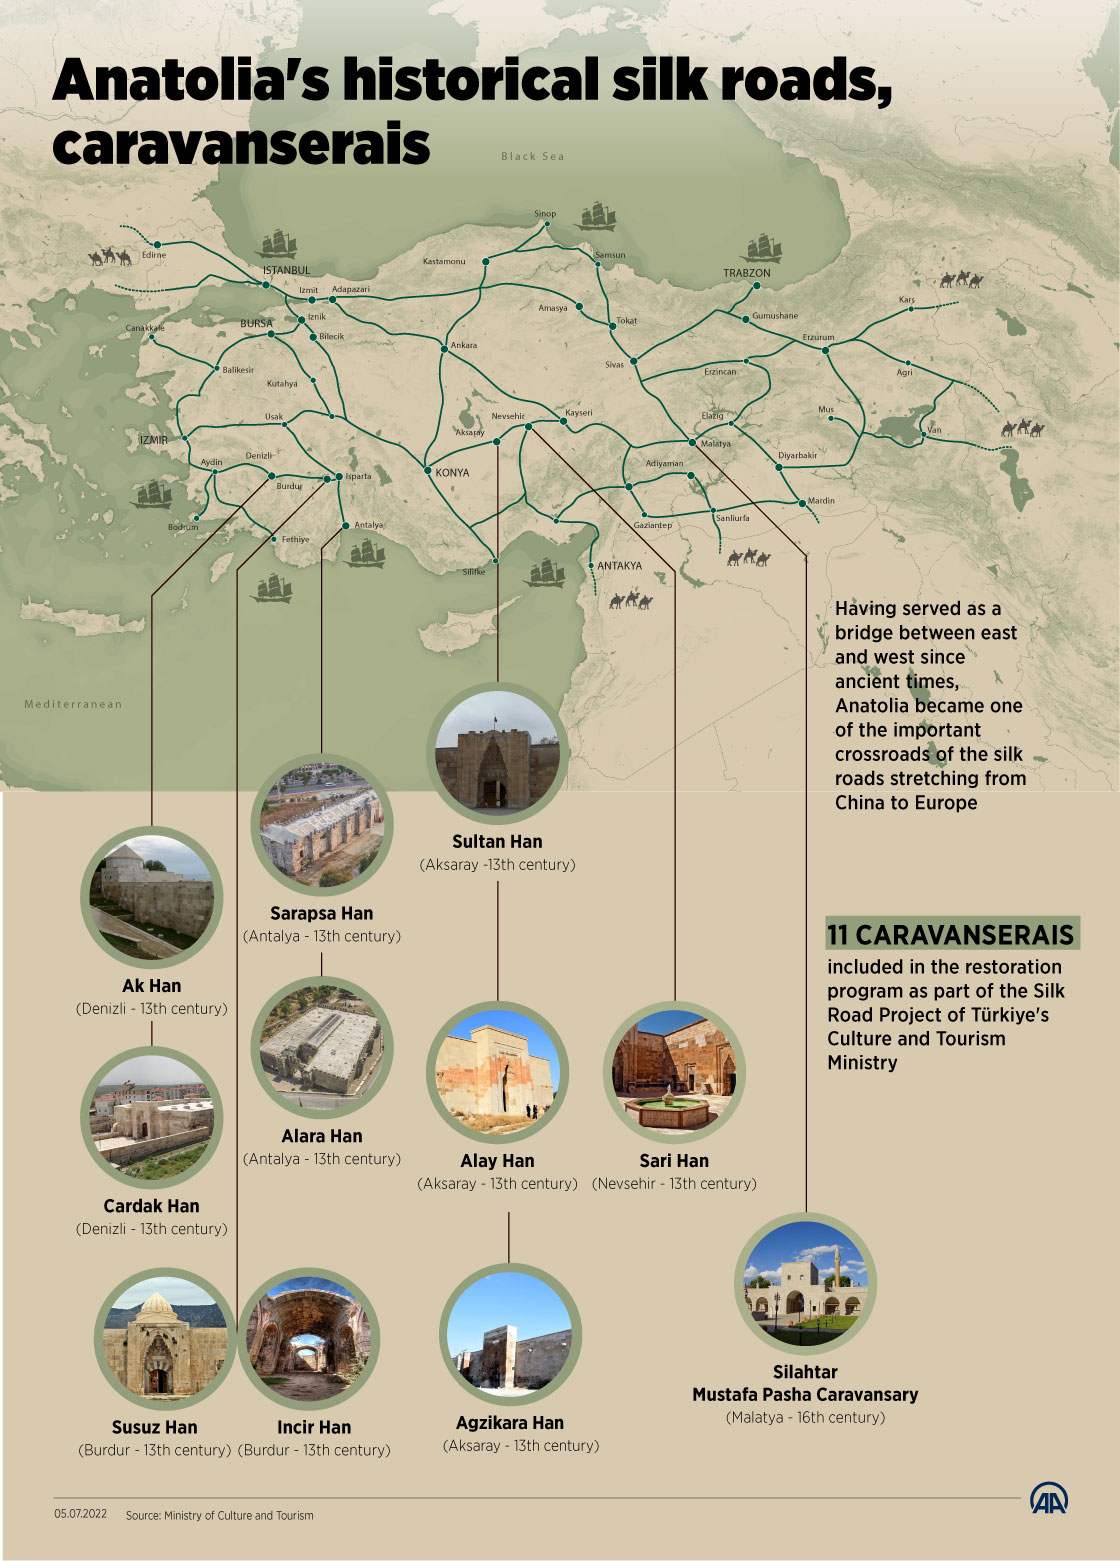 Anatolia's historical silk roads, caravanserais